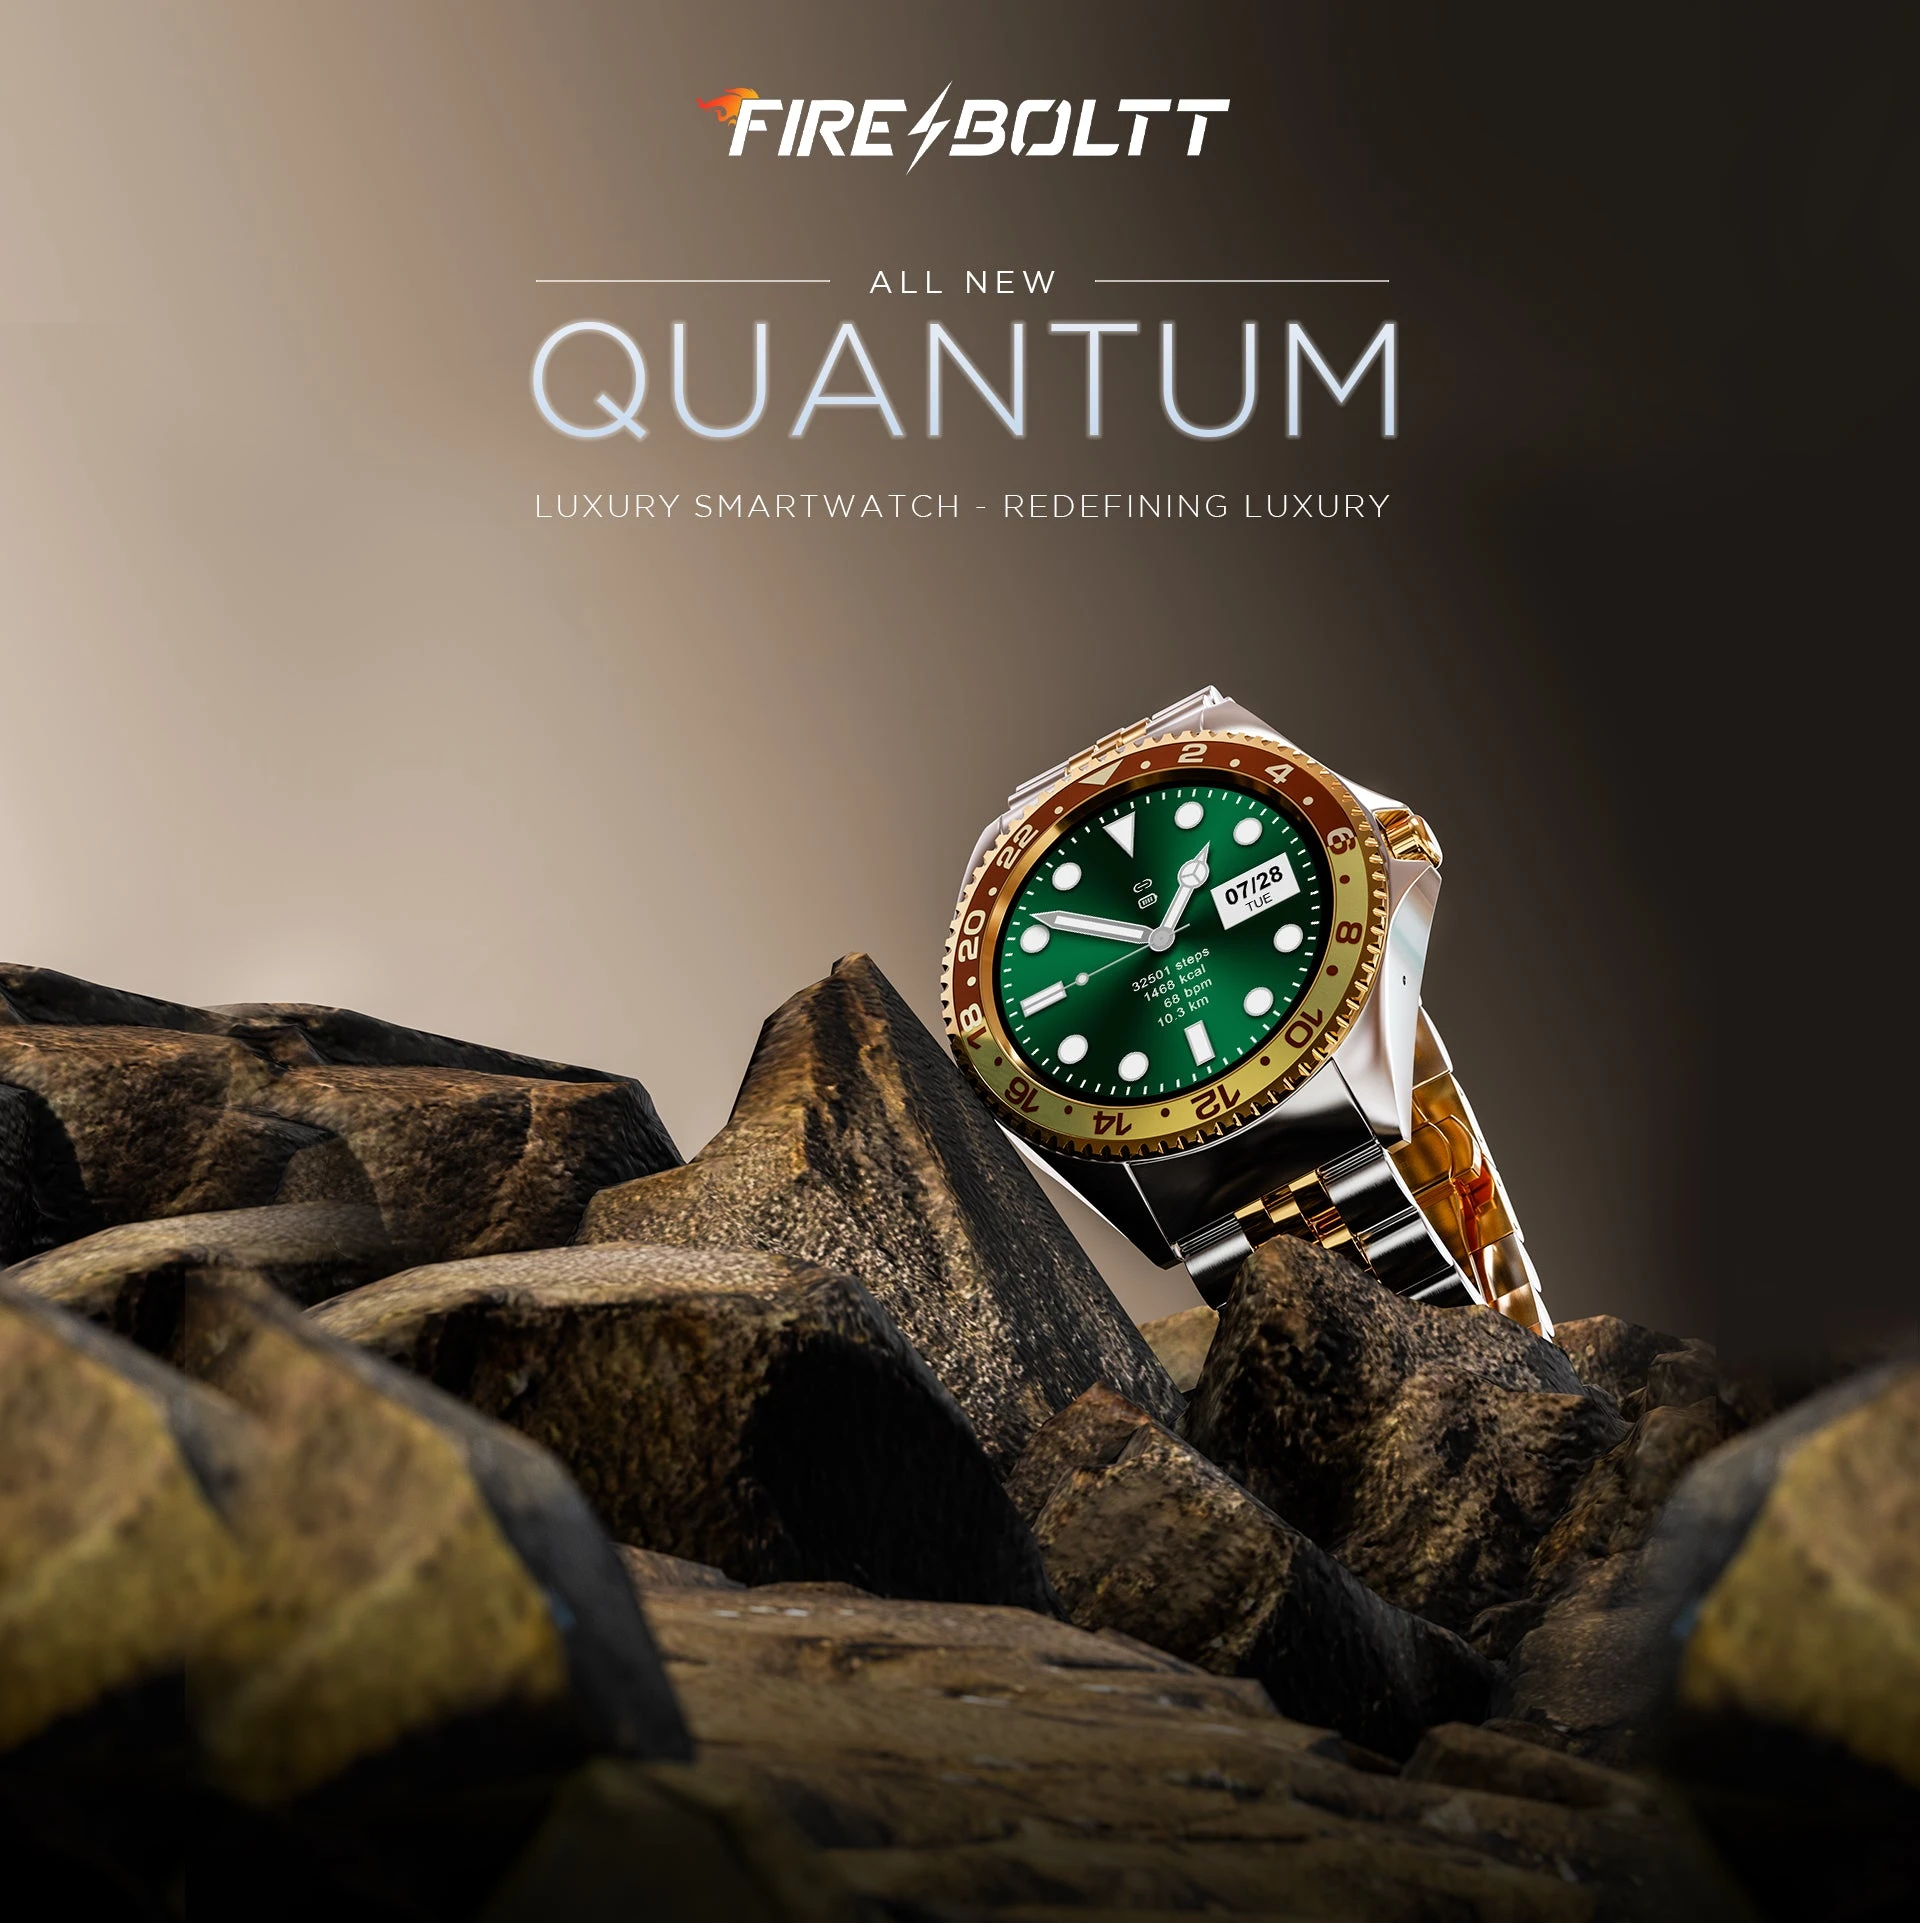 fire-boltt Quantum features